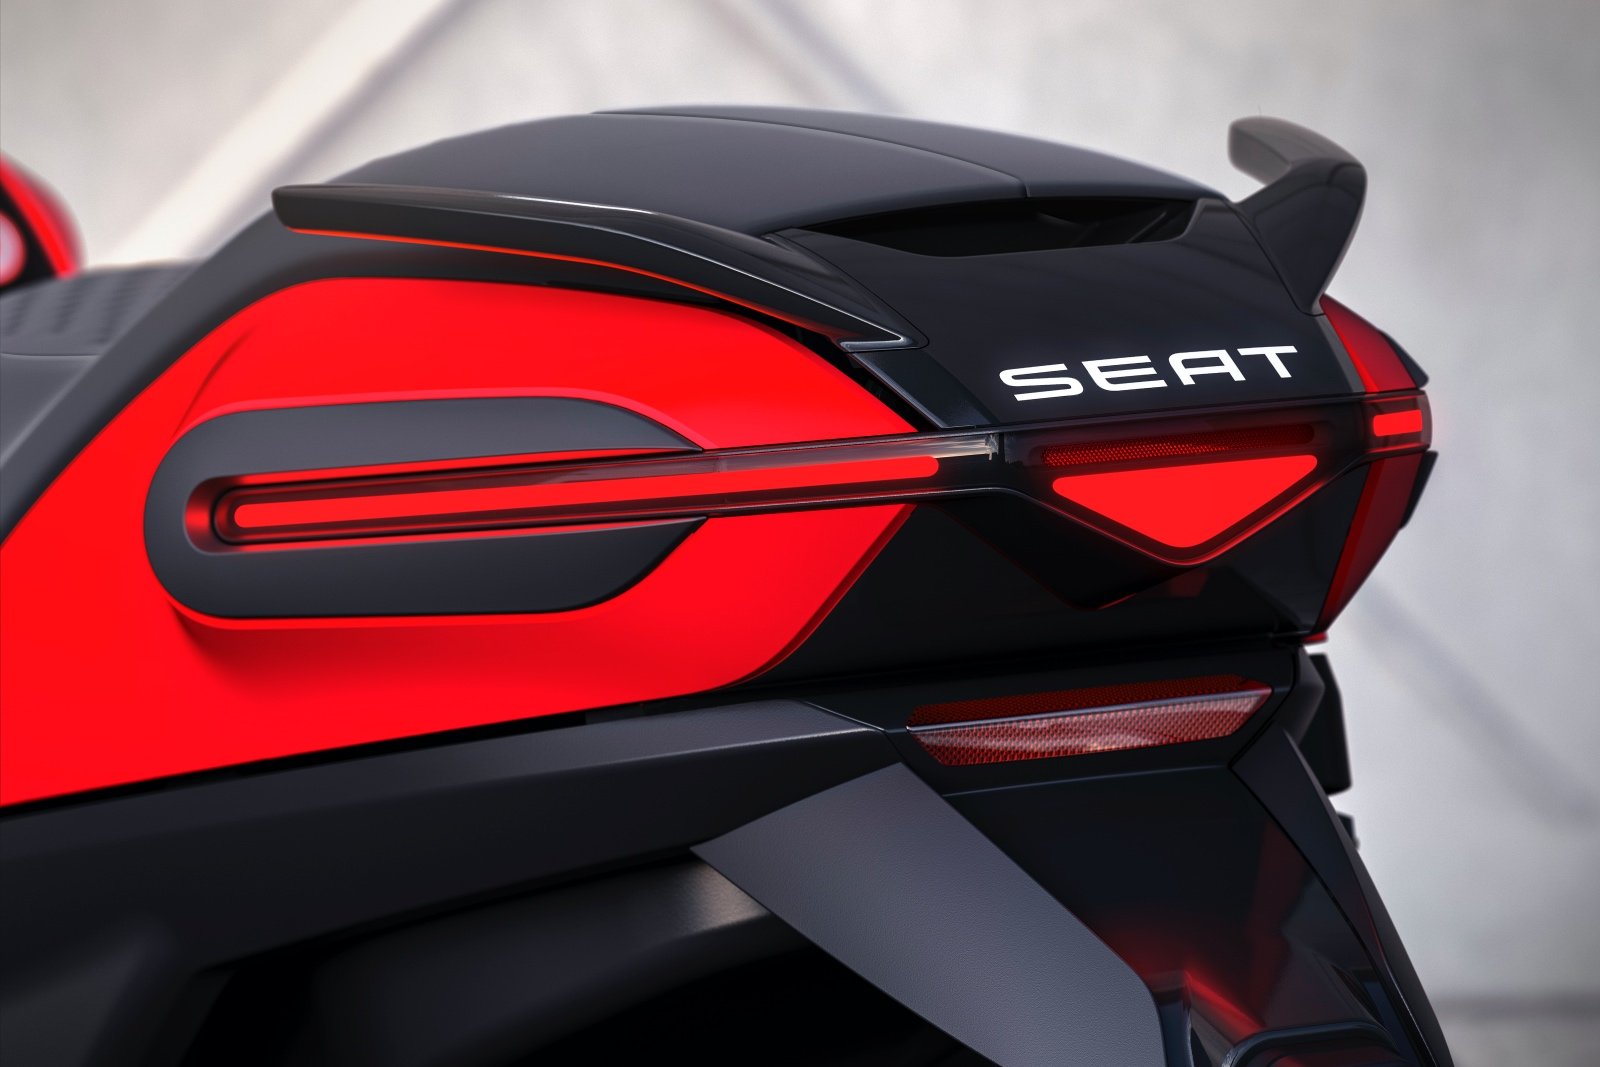 seat-e-scooter-8